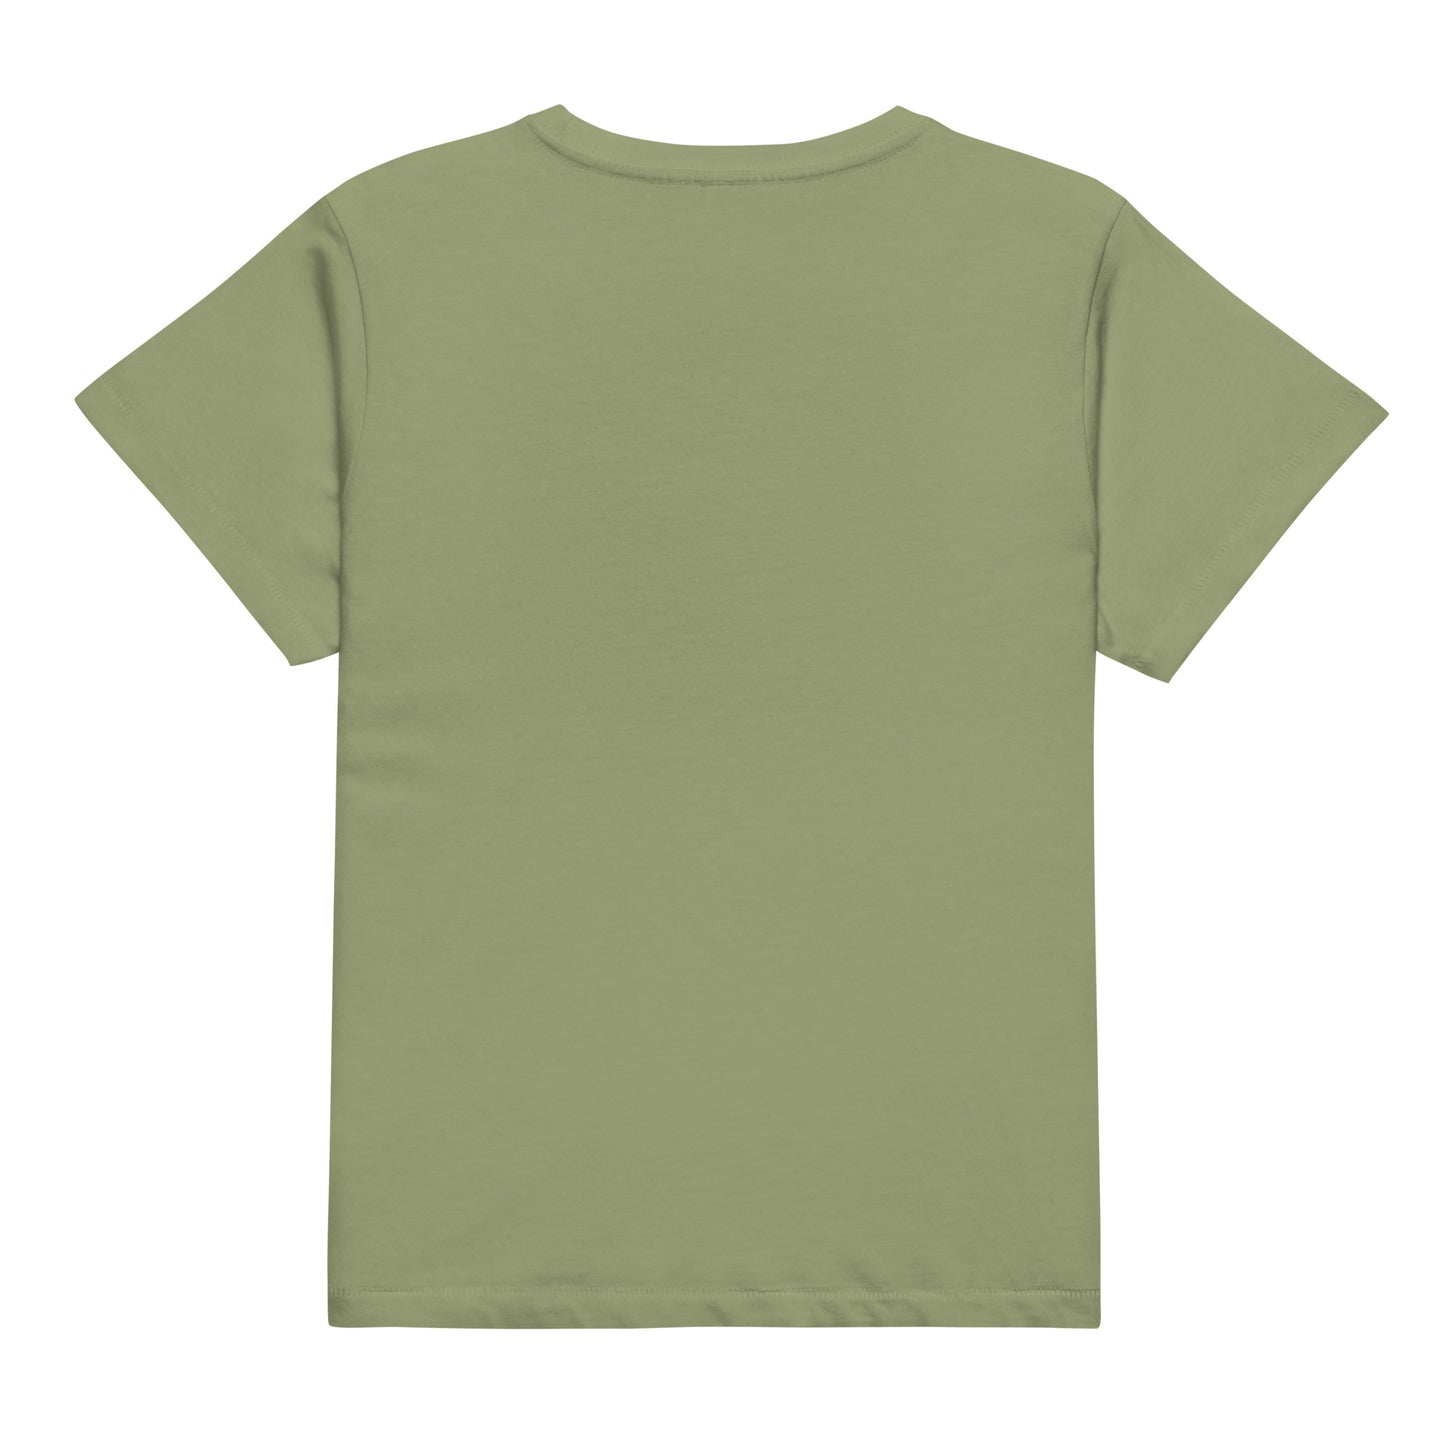 Q115 - Ladies Highwaist T-shirt (Get set! : Khaki)